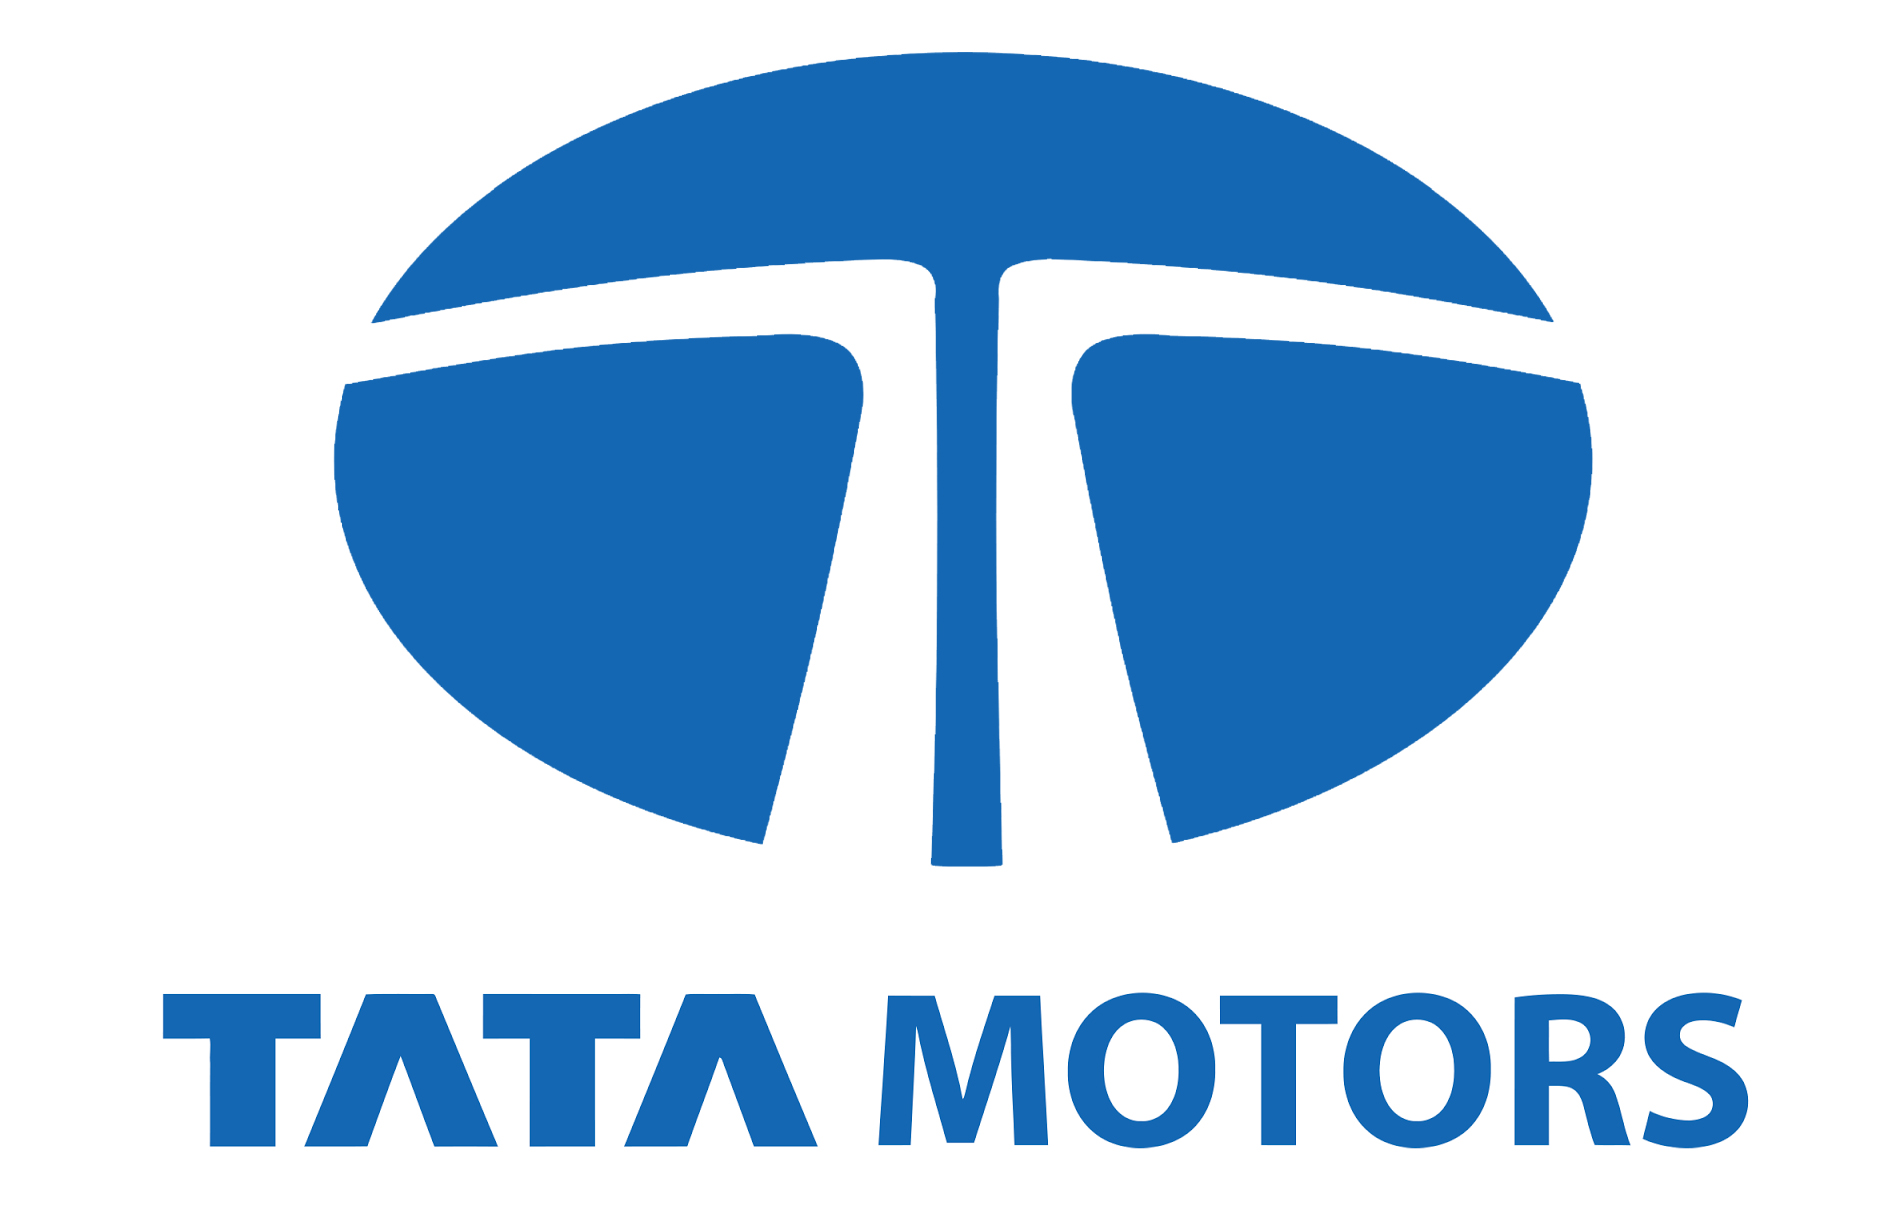 Tata Motors Cars Showroom - Mahadeva Vehicles Pvt Ltd|Show Room|Automotive